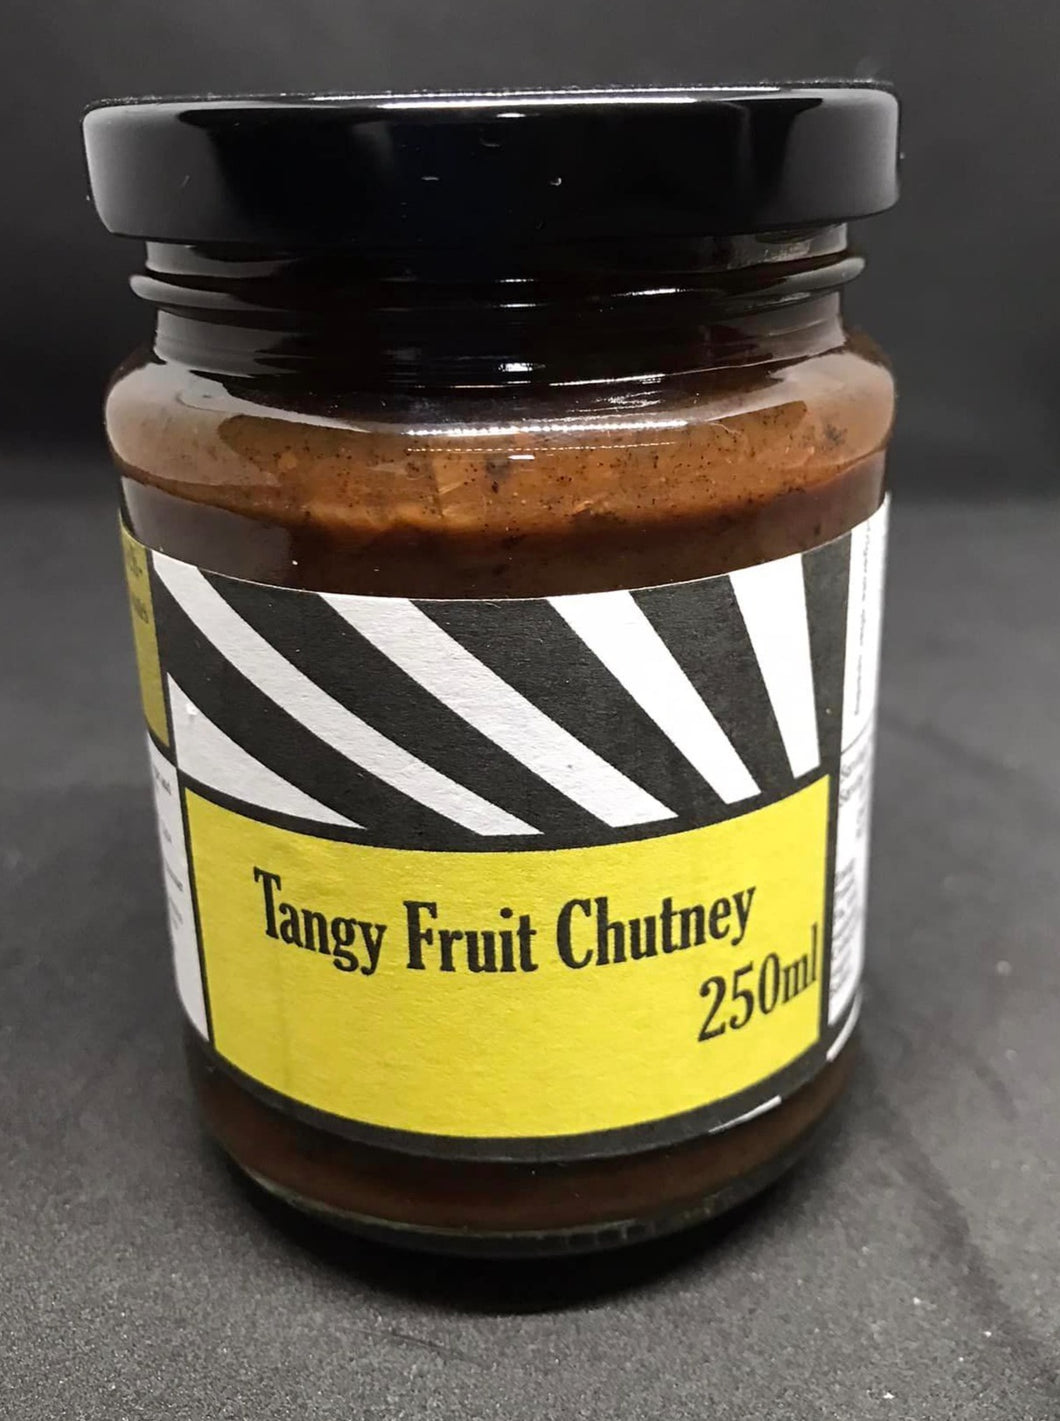 Chutney - Tangy Fruit Chutney